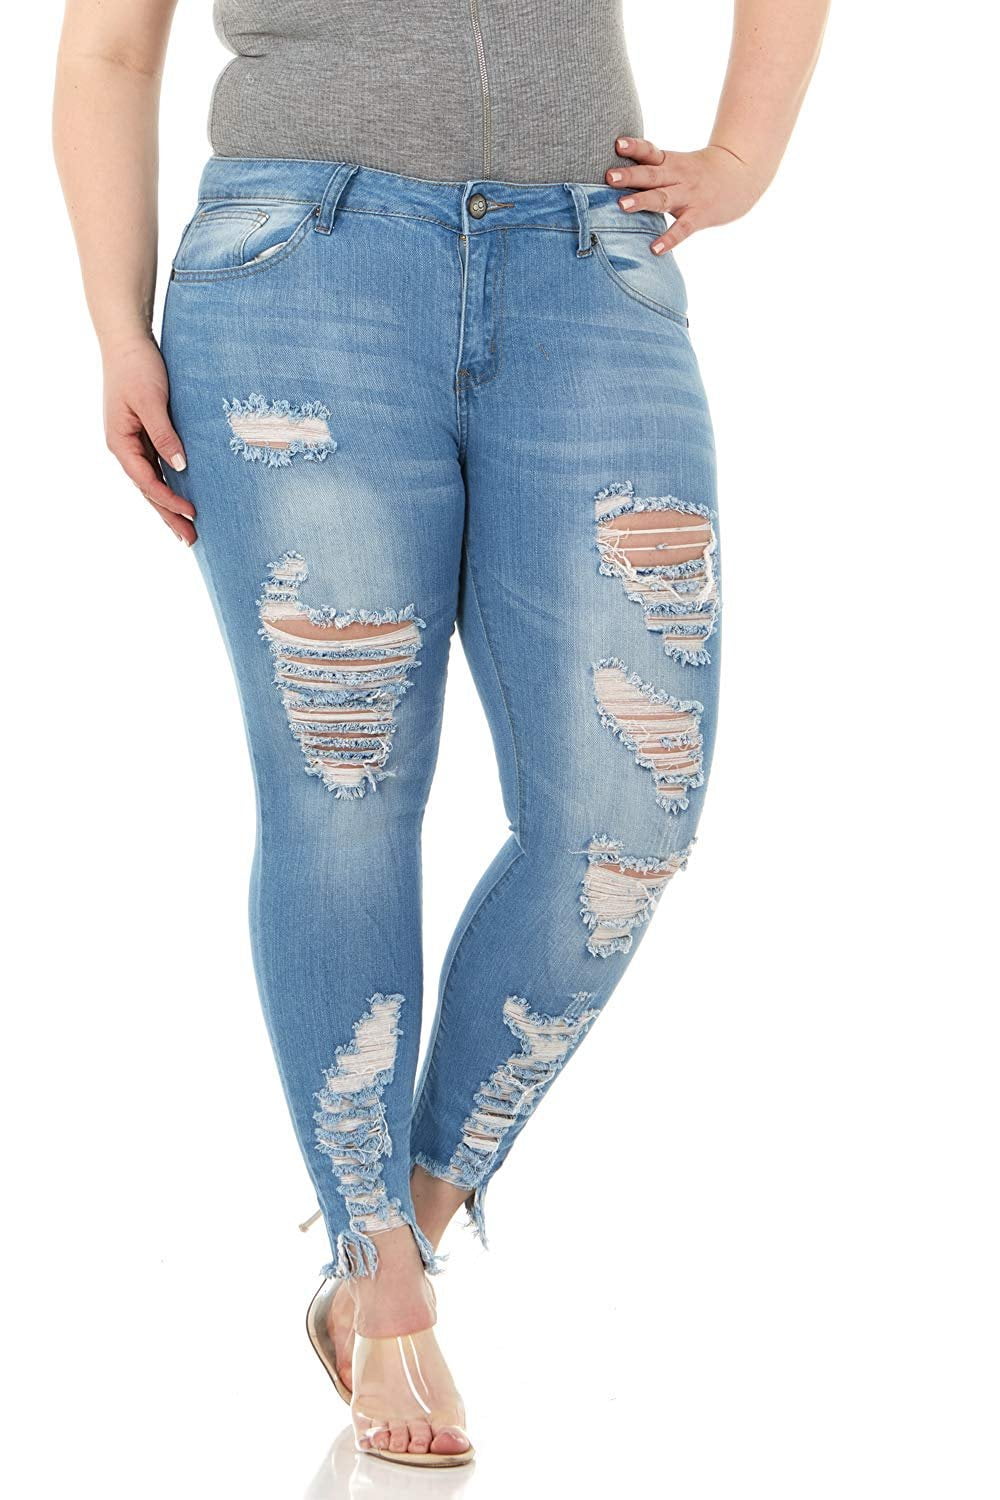 Ripped Jeans Teen Girls Washed Skinny Cropped Torn Hem Light Blue Denim Plus Size 14W Walmart.com